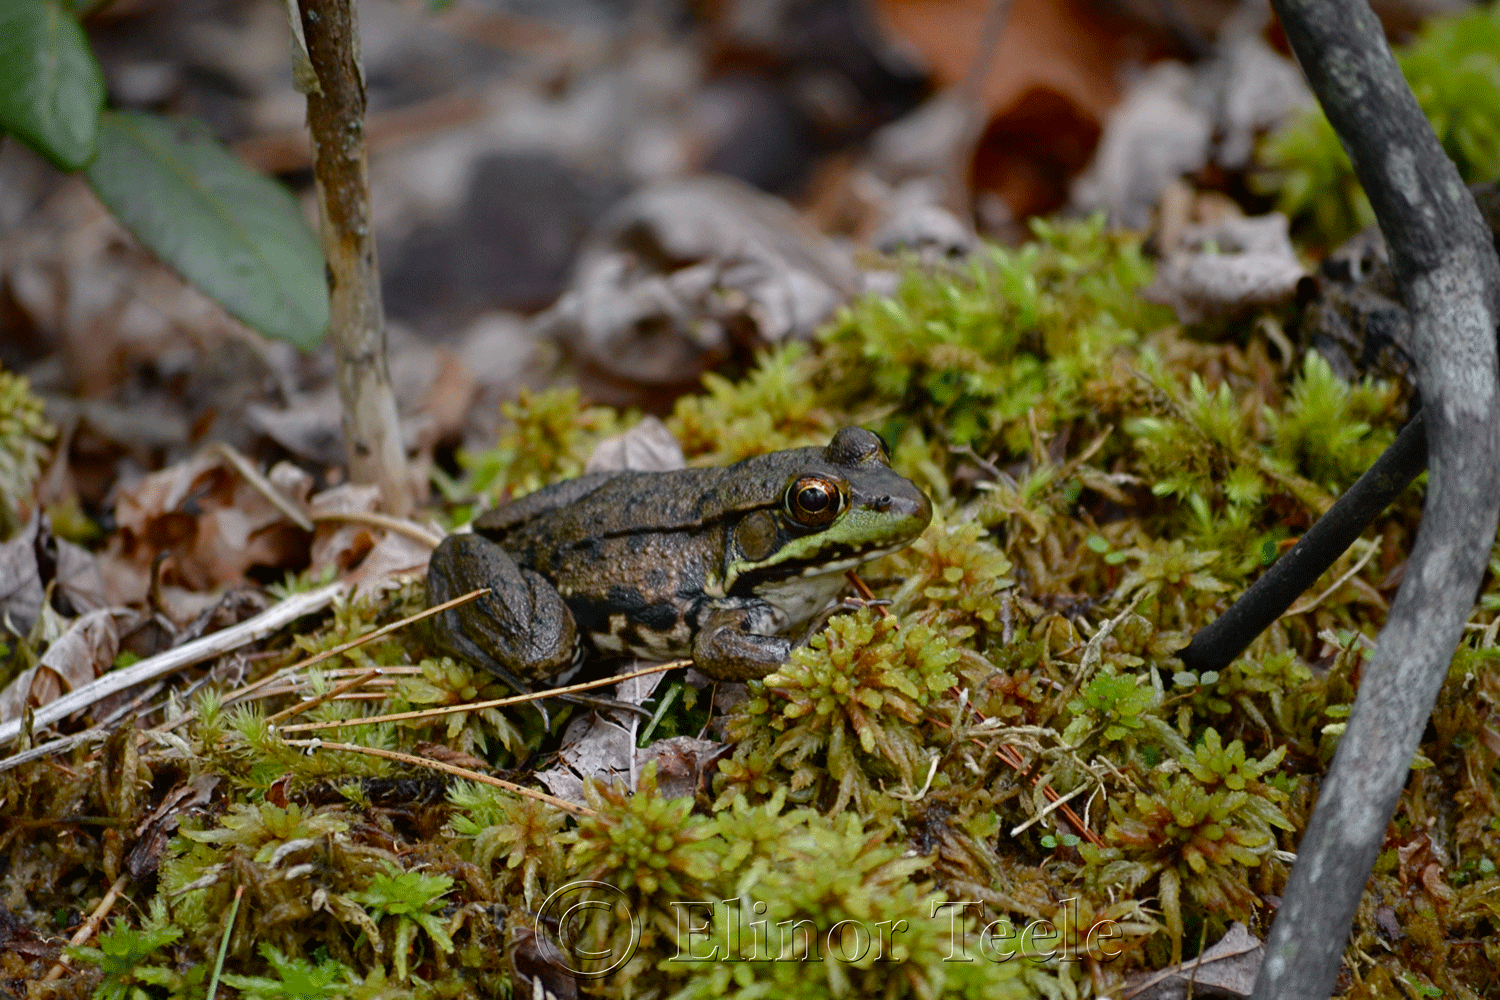 Frog, Ravenswood, Gloucester MA